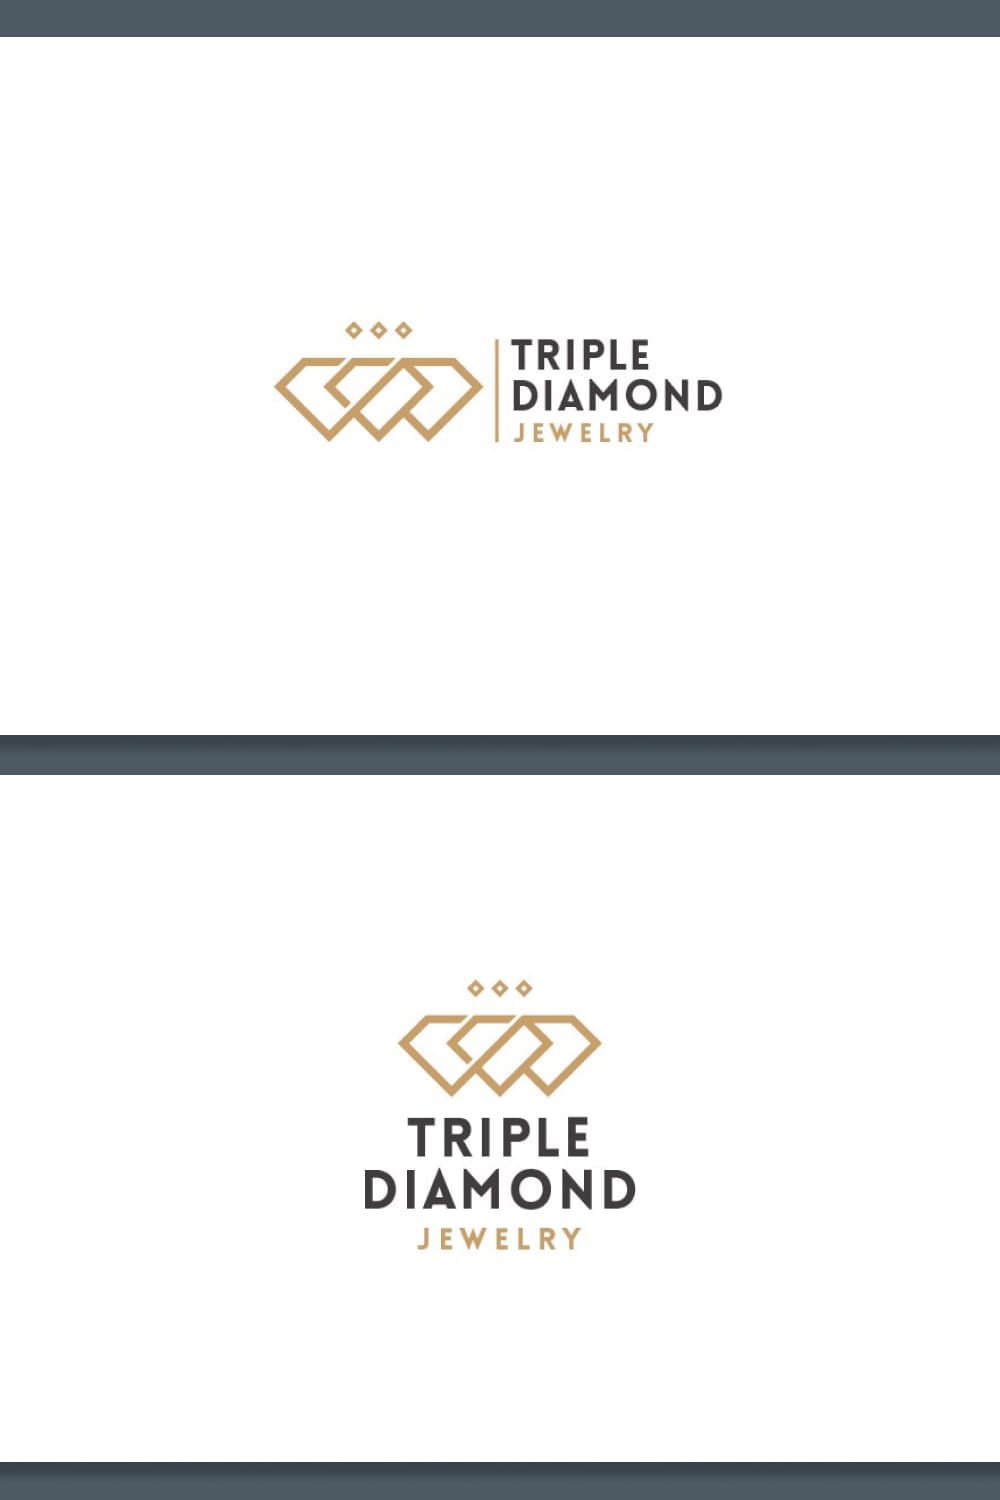 triple diamond jewelry logo for elegant brand.